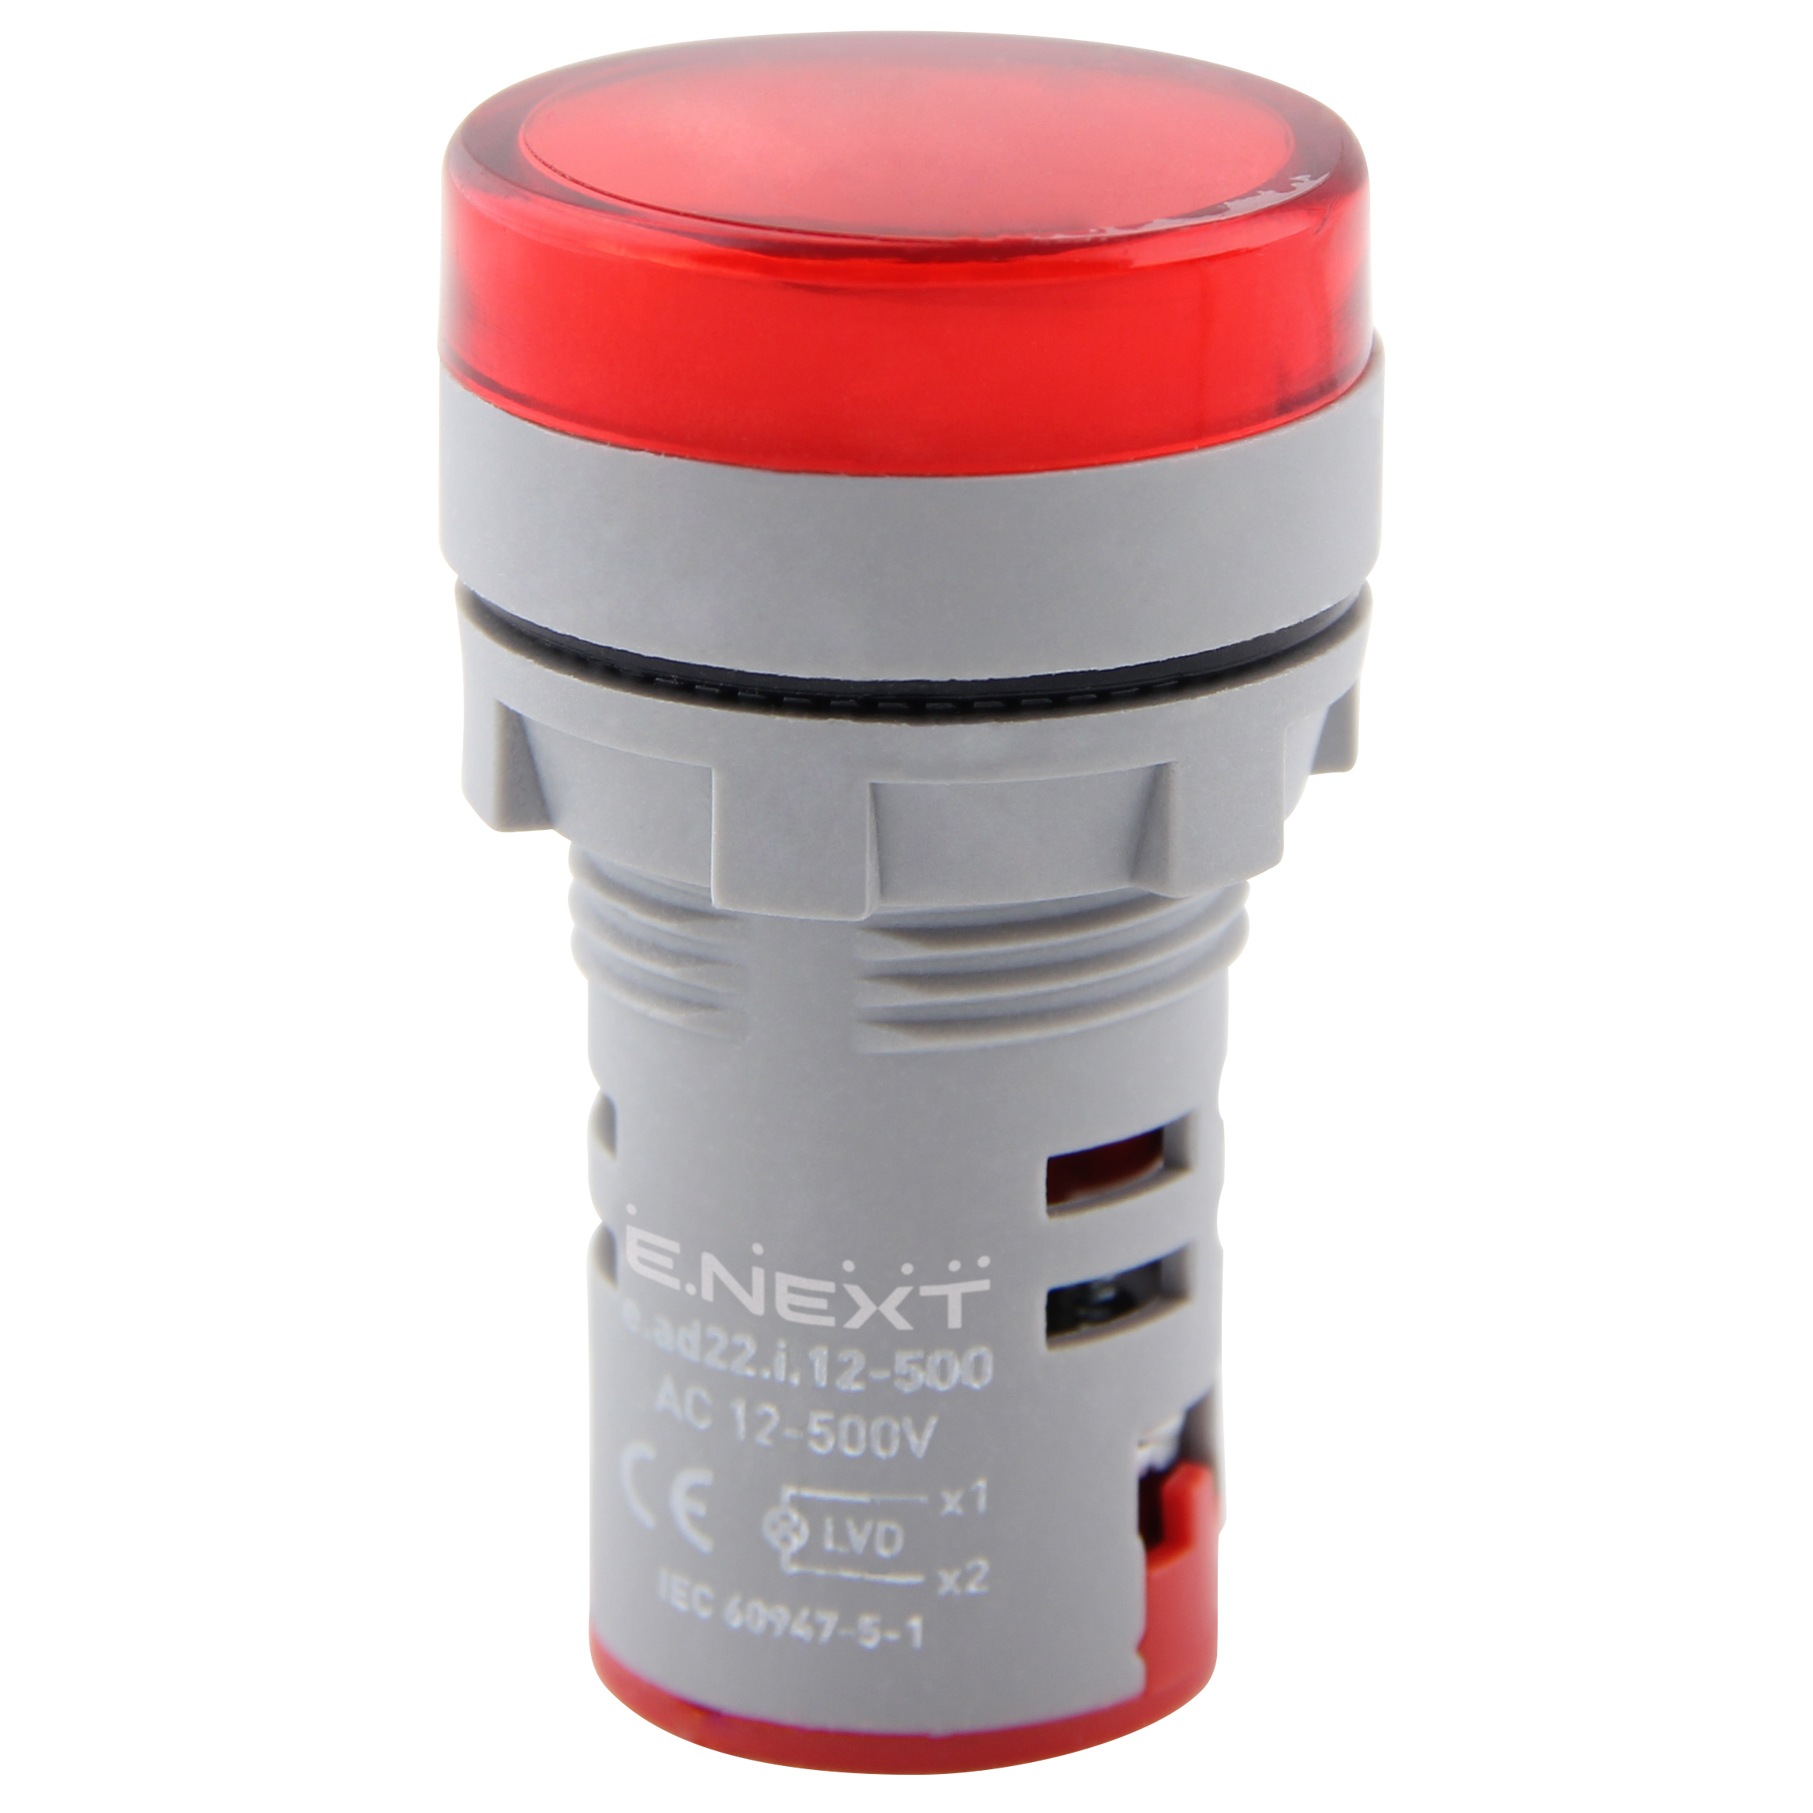 Сигнальная лампа LED с индикатором напряжения e.ad22.i.12-500.red АС 12-500V красная s009034 ENEXT